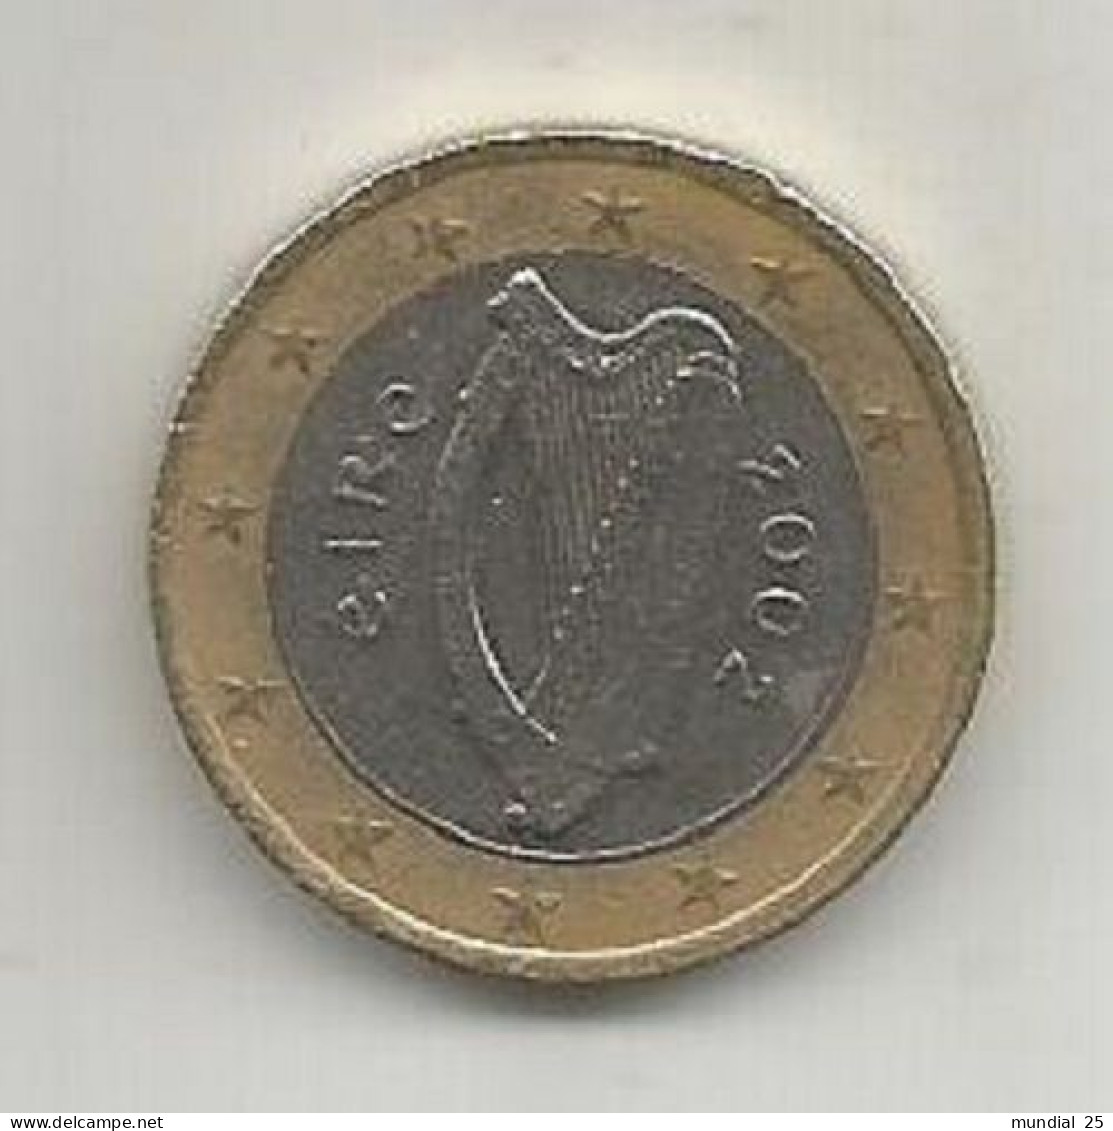 IRELAND 1 EURO 2002 - Irland